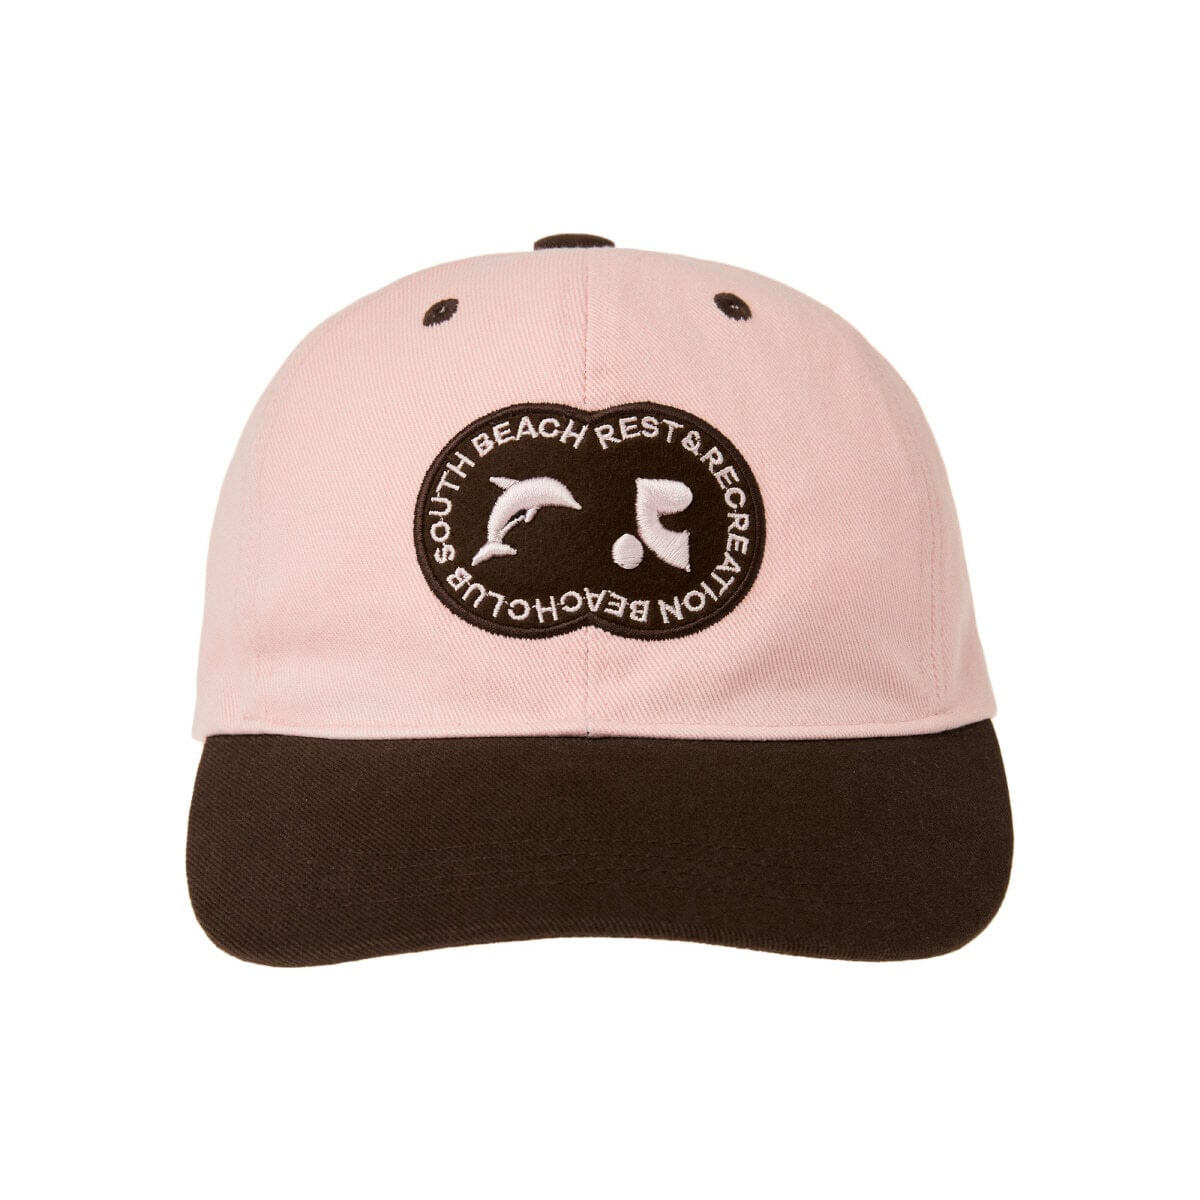 [rest & recreation] RR NEW LOGO PATCH BALL CAP - PINK 正規韓国ブランド 韓国ファッション  韓国代行 rest recreation レストアンドレクリエーション restrecreation | BONZ (韓国ブランド 代行)  powered 